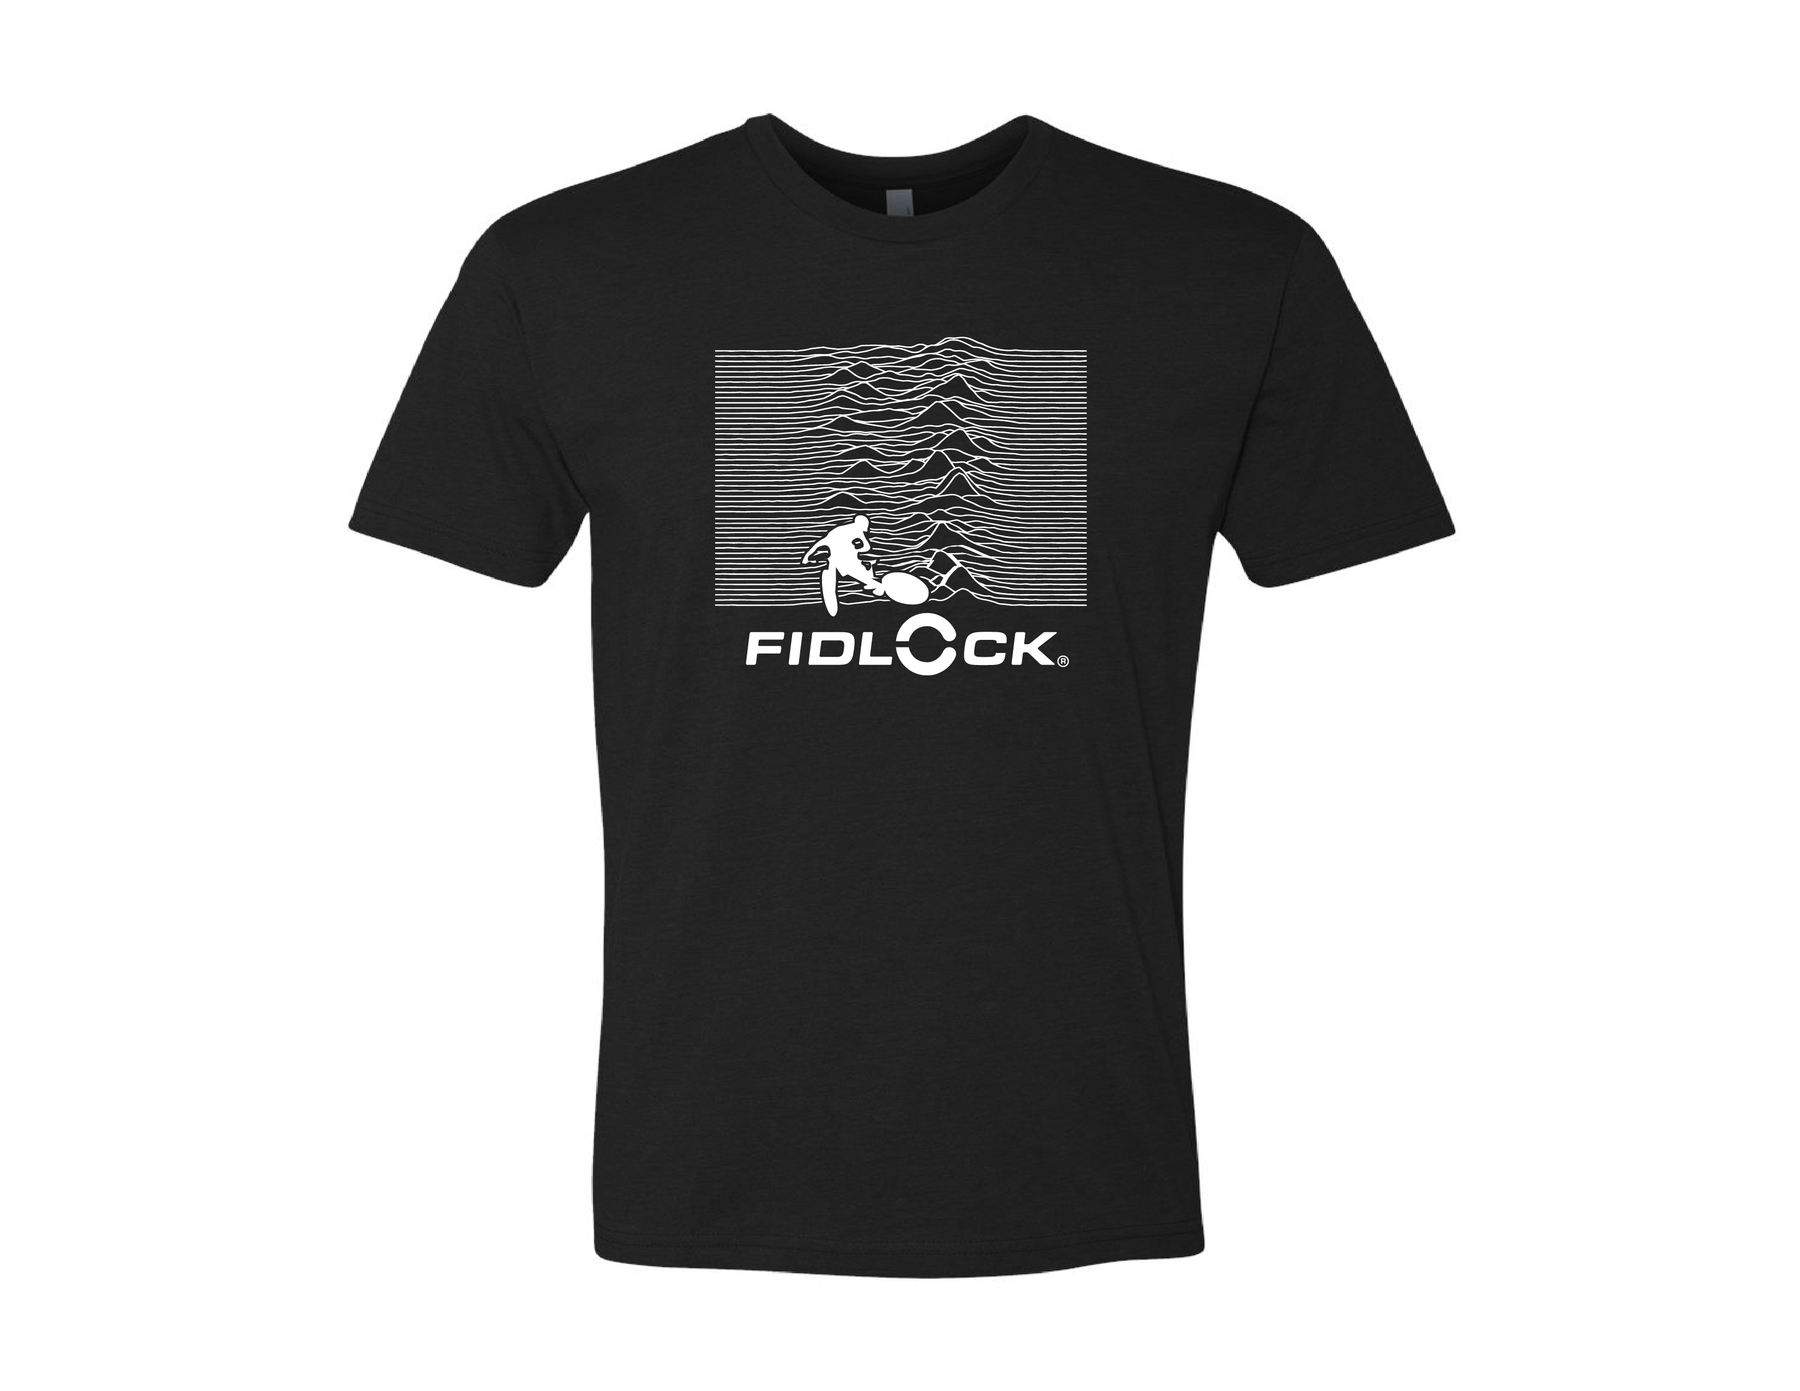 Tee-shirt unisexe de la chaîne de montagnes Fidlock